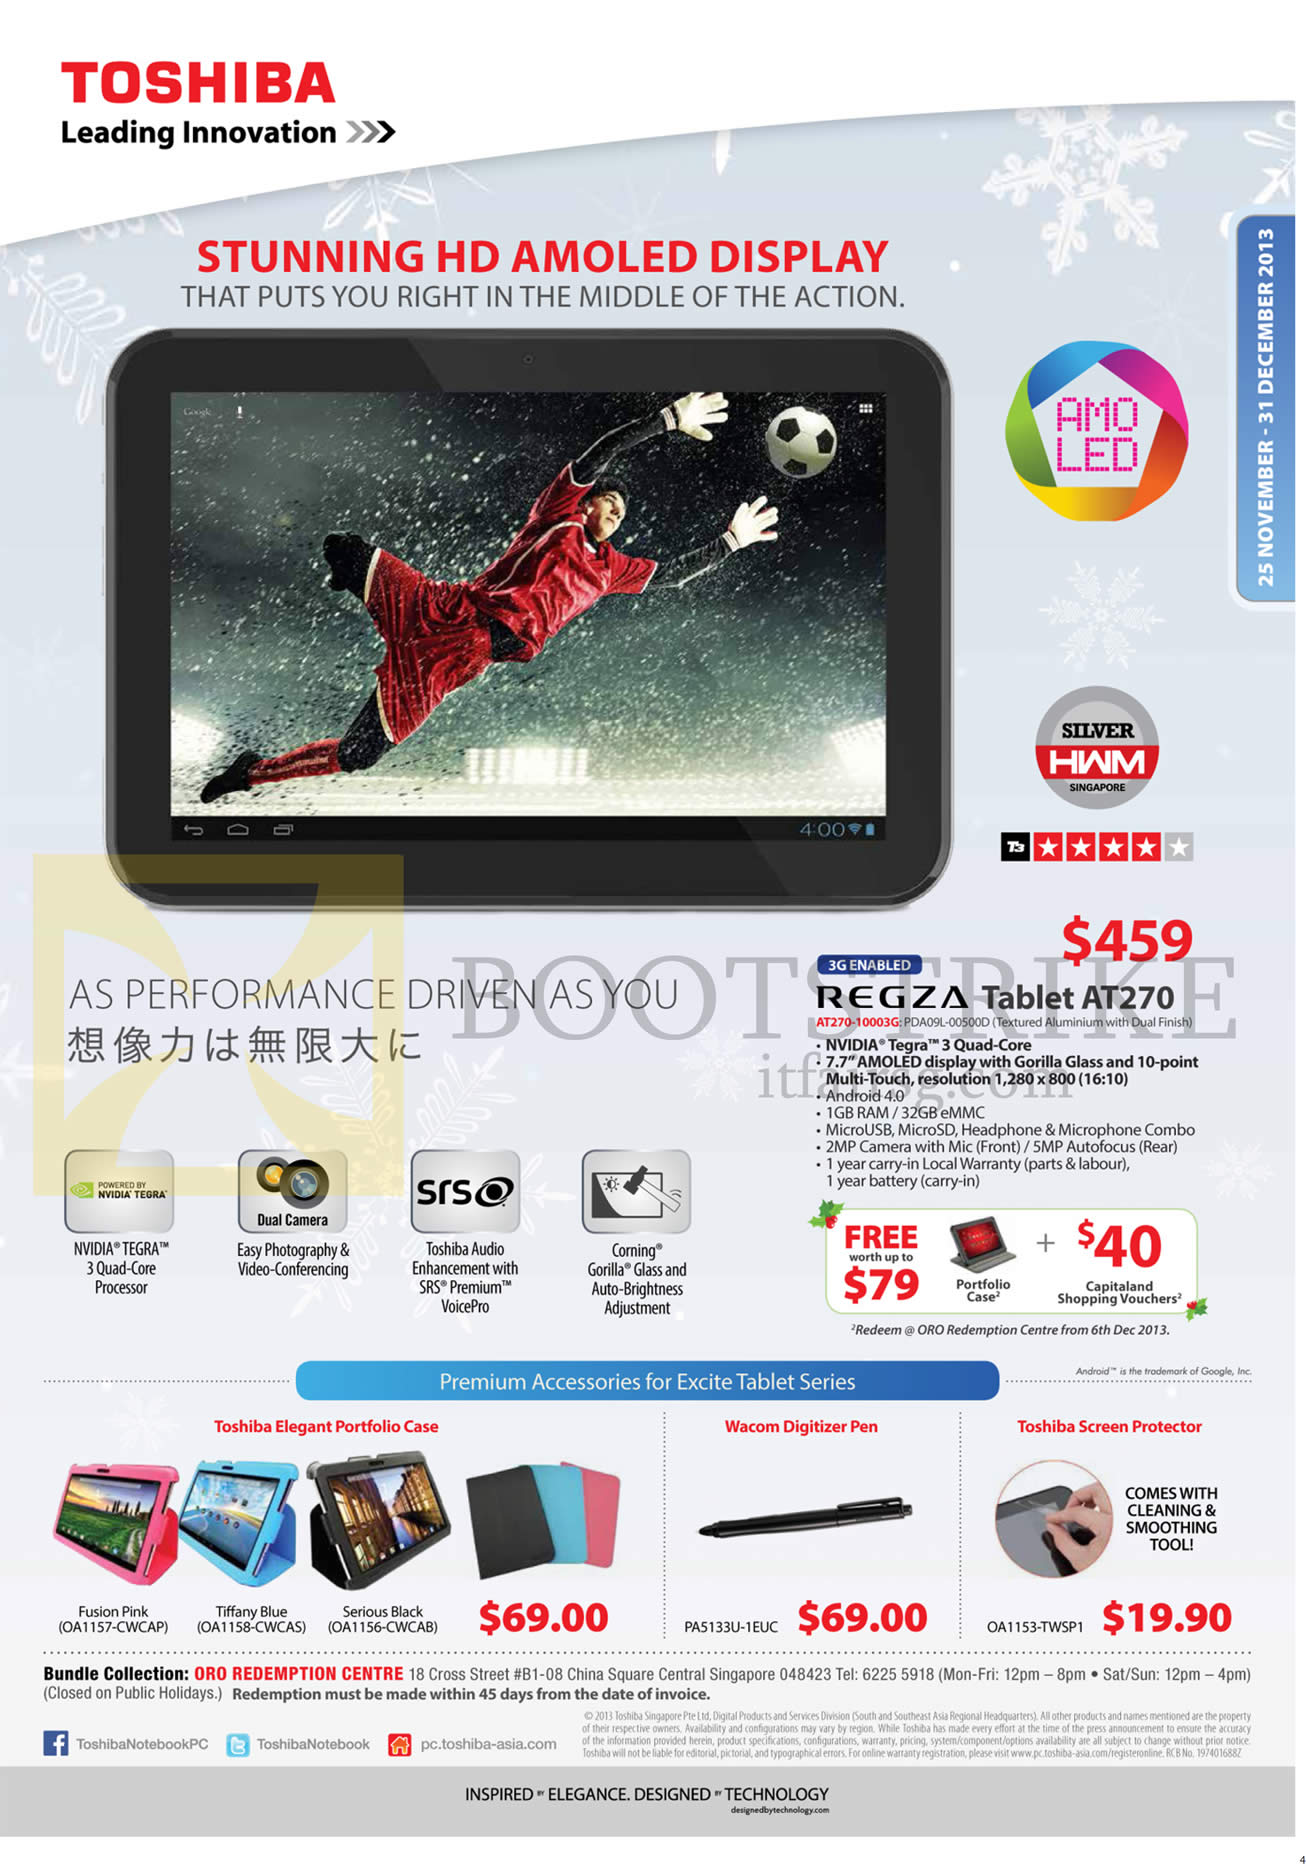 SITEX 2013 price list image brochure of Toshiba Tablet, Accessories, Regza AT270, Portfolio Case, Digitizer Pen, Screen Protector